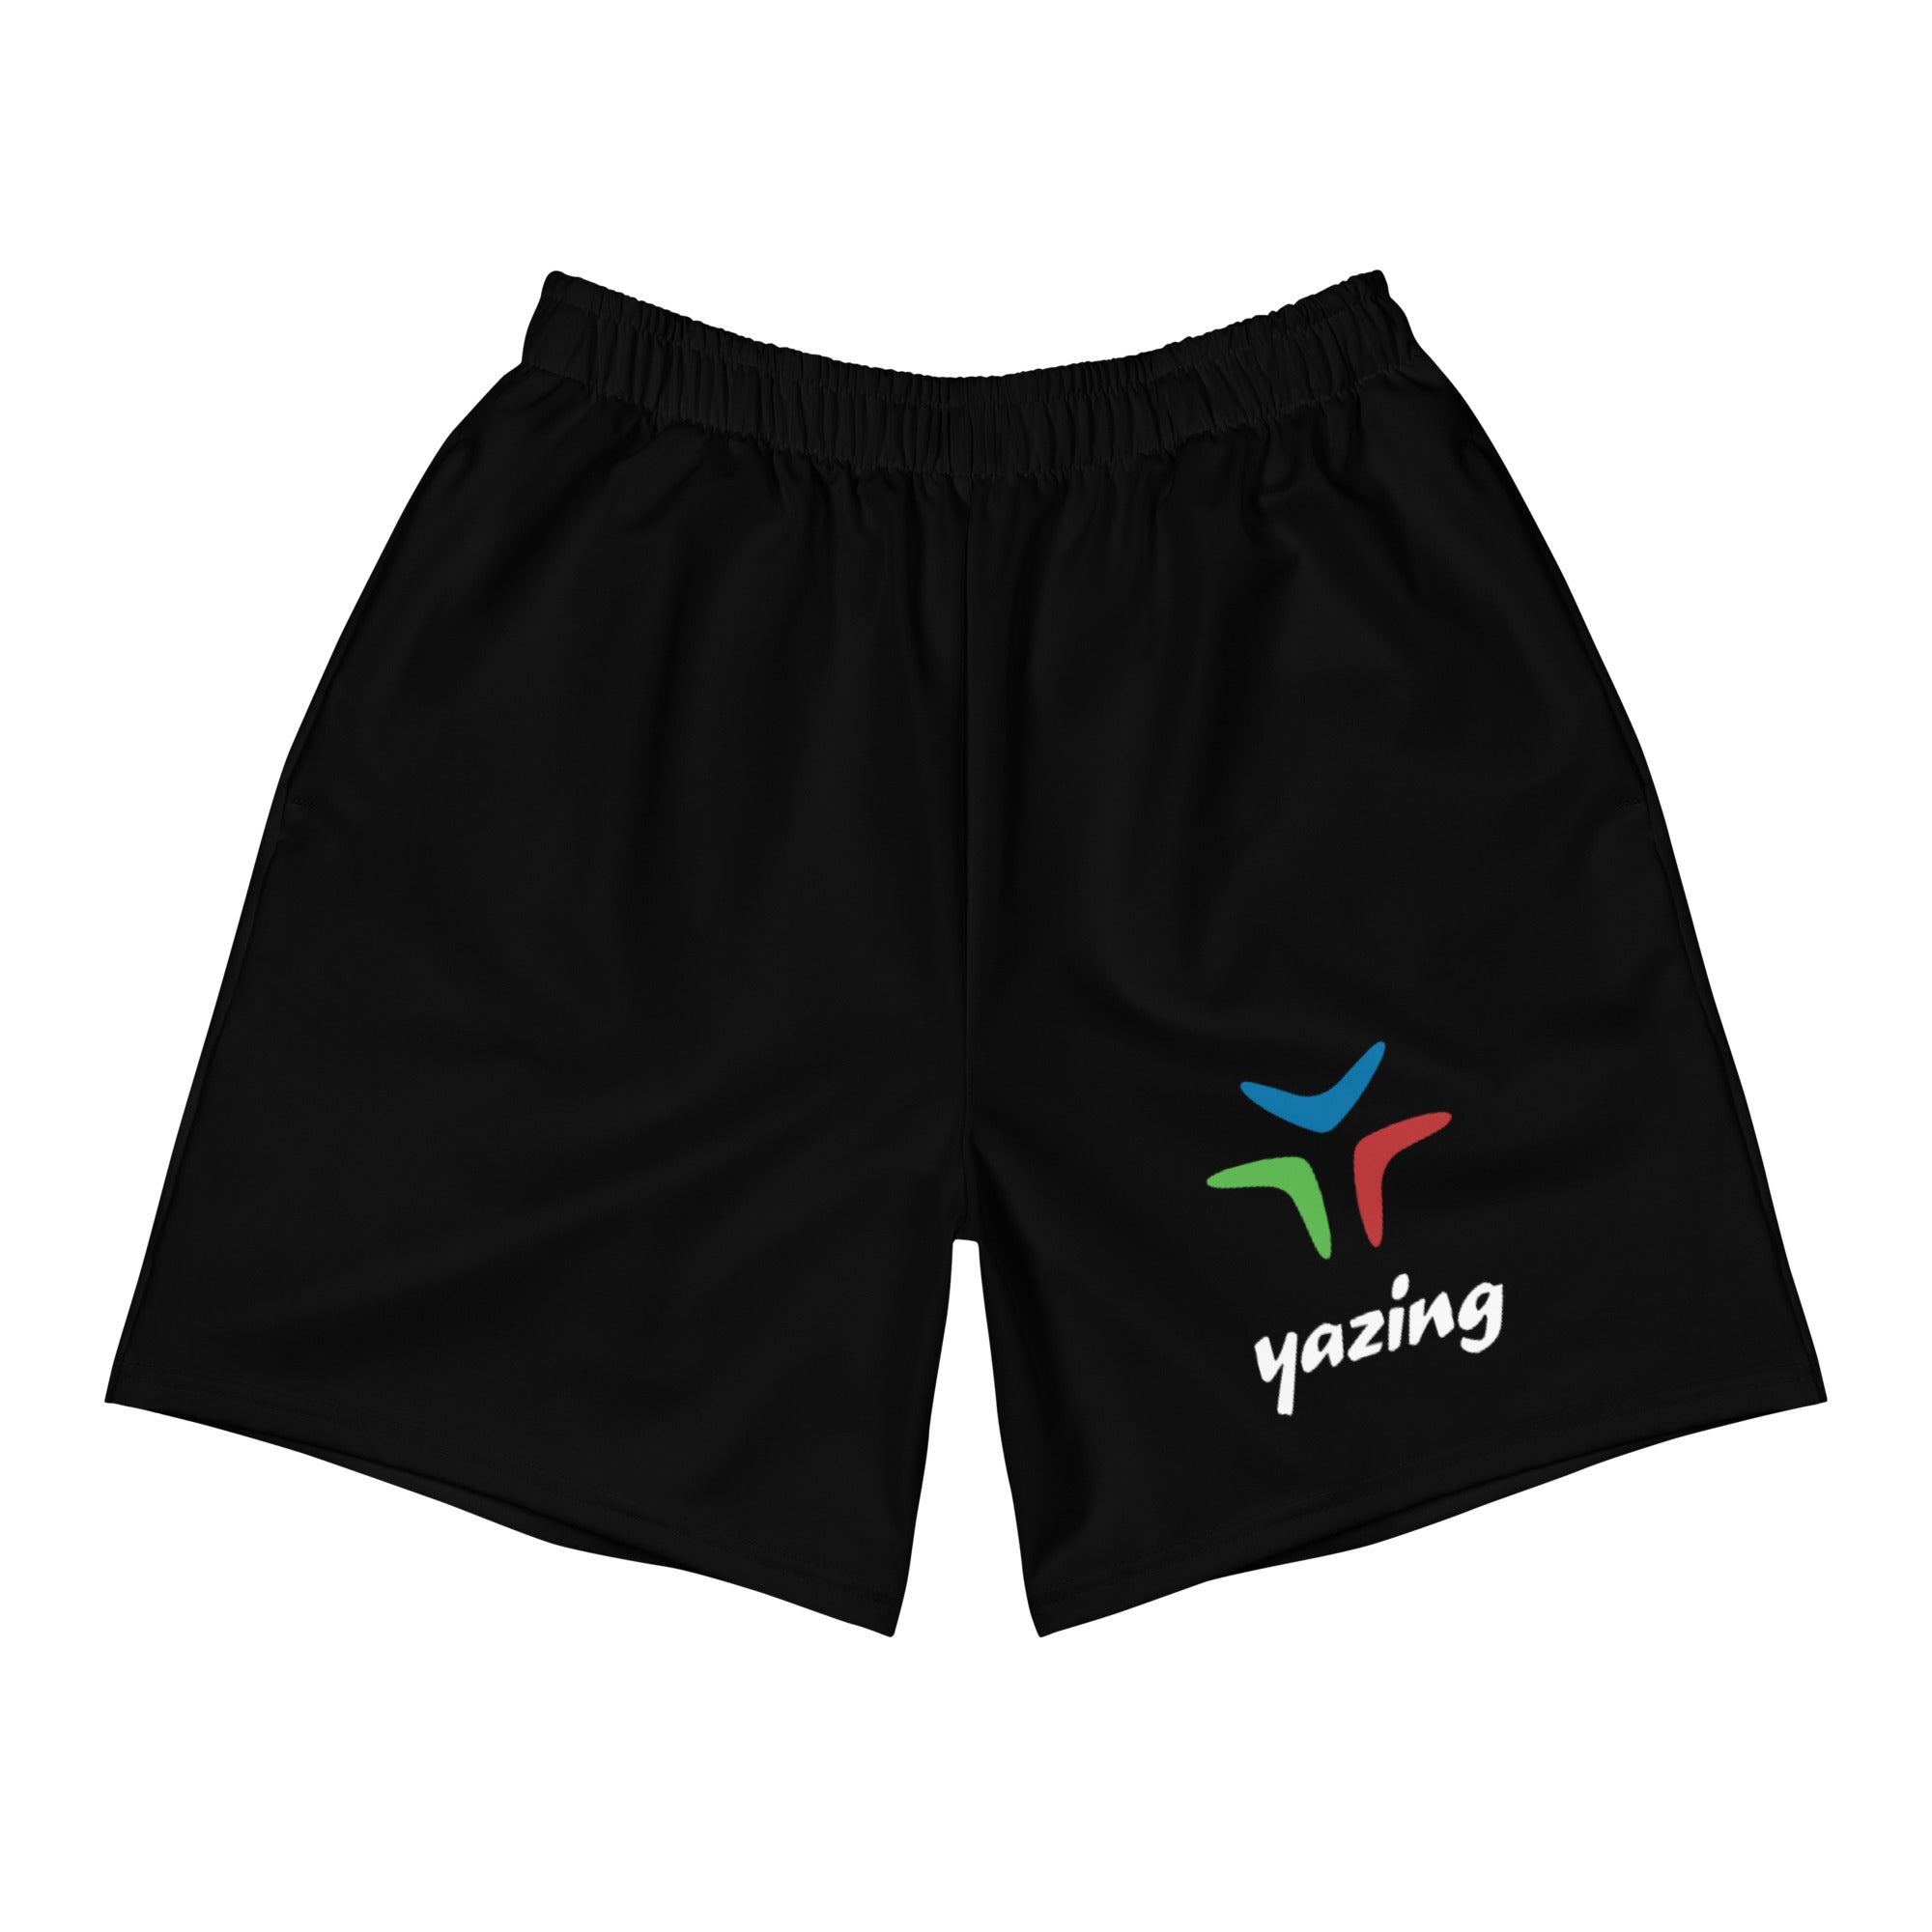 Yazing Men's Recycled Athletic Shorts